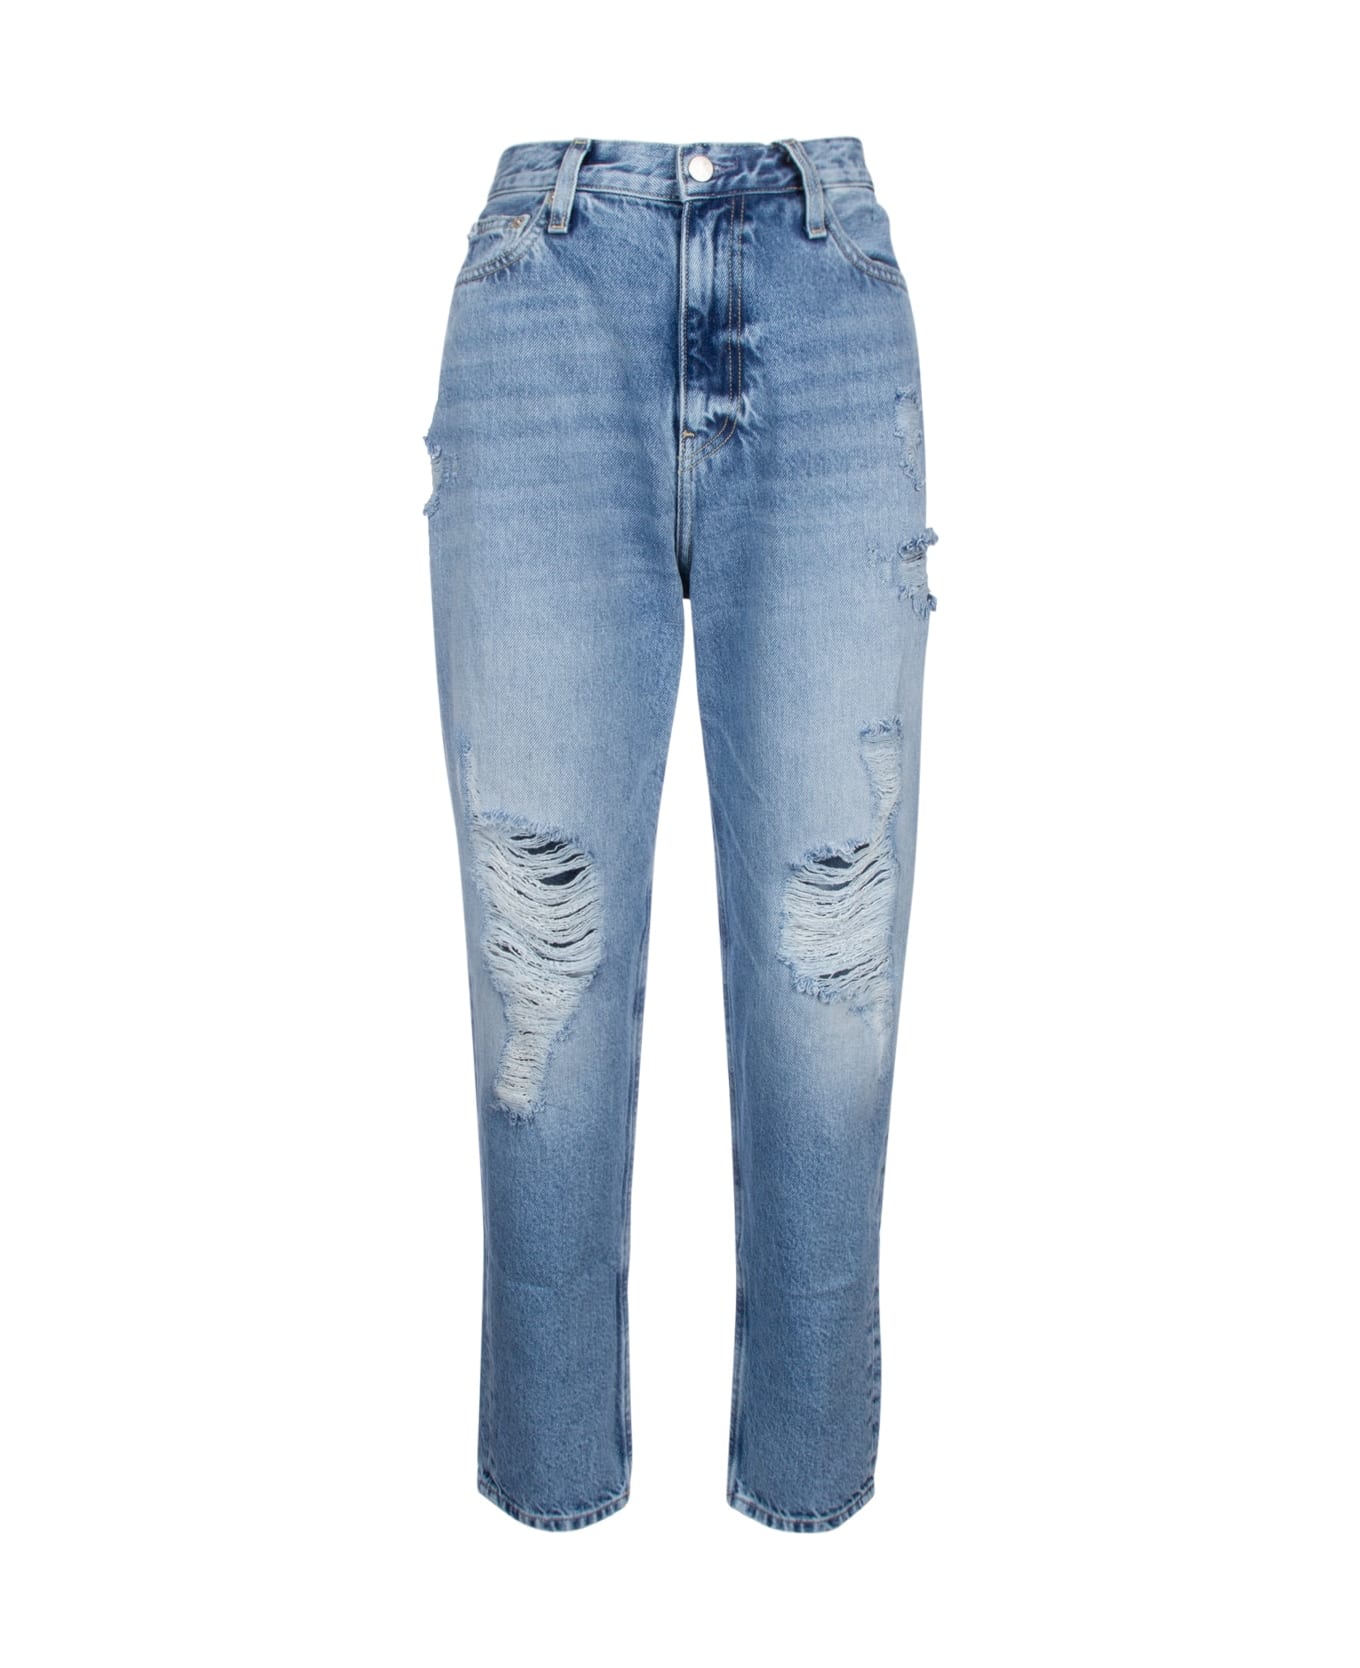 Calvin Klein Jeans Jeans - 1A4